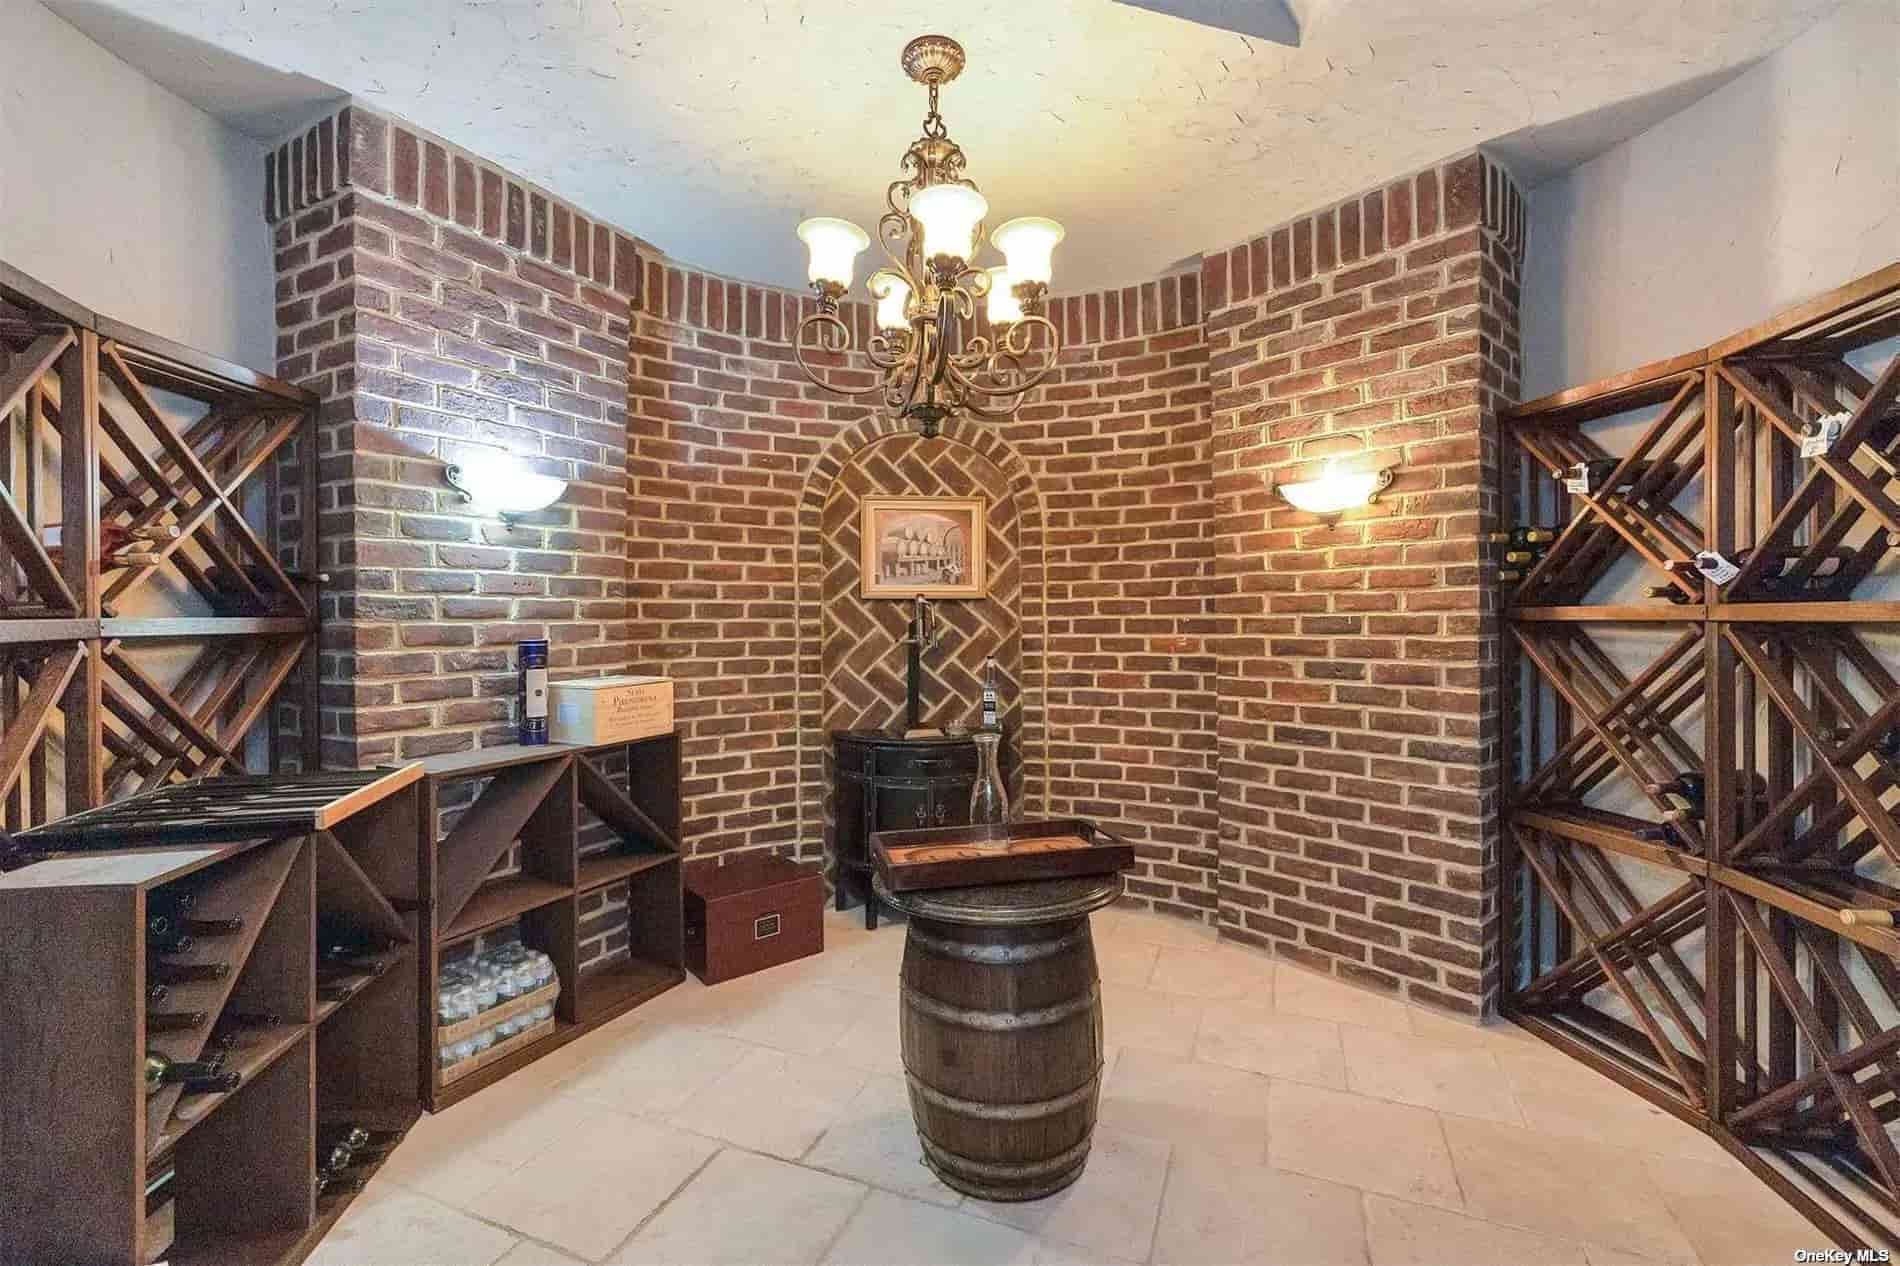 Jordan Belfort’s wine cellar